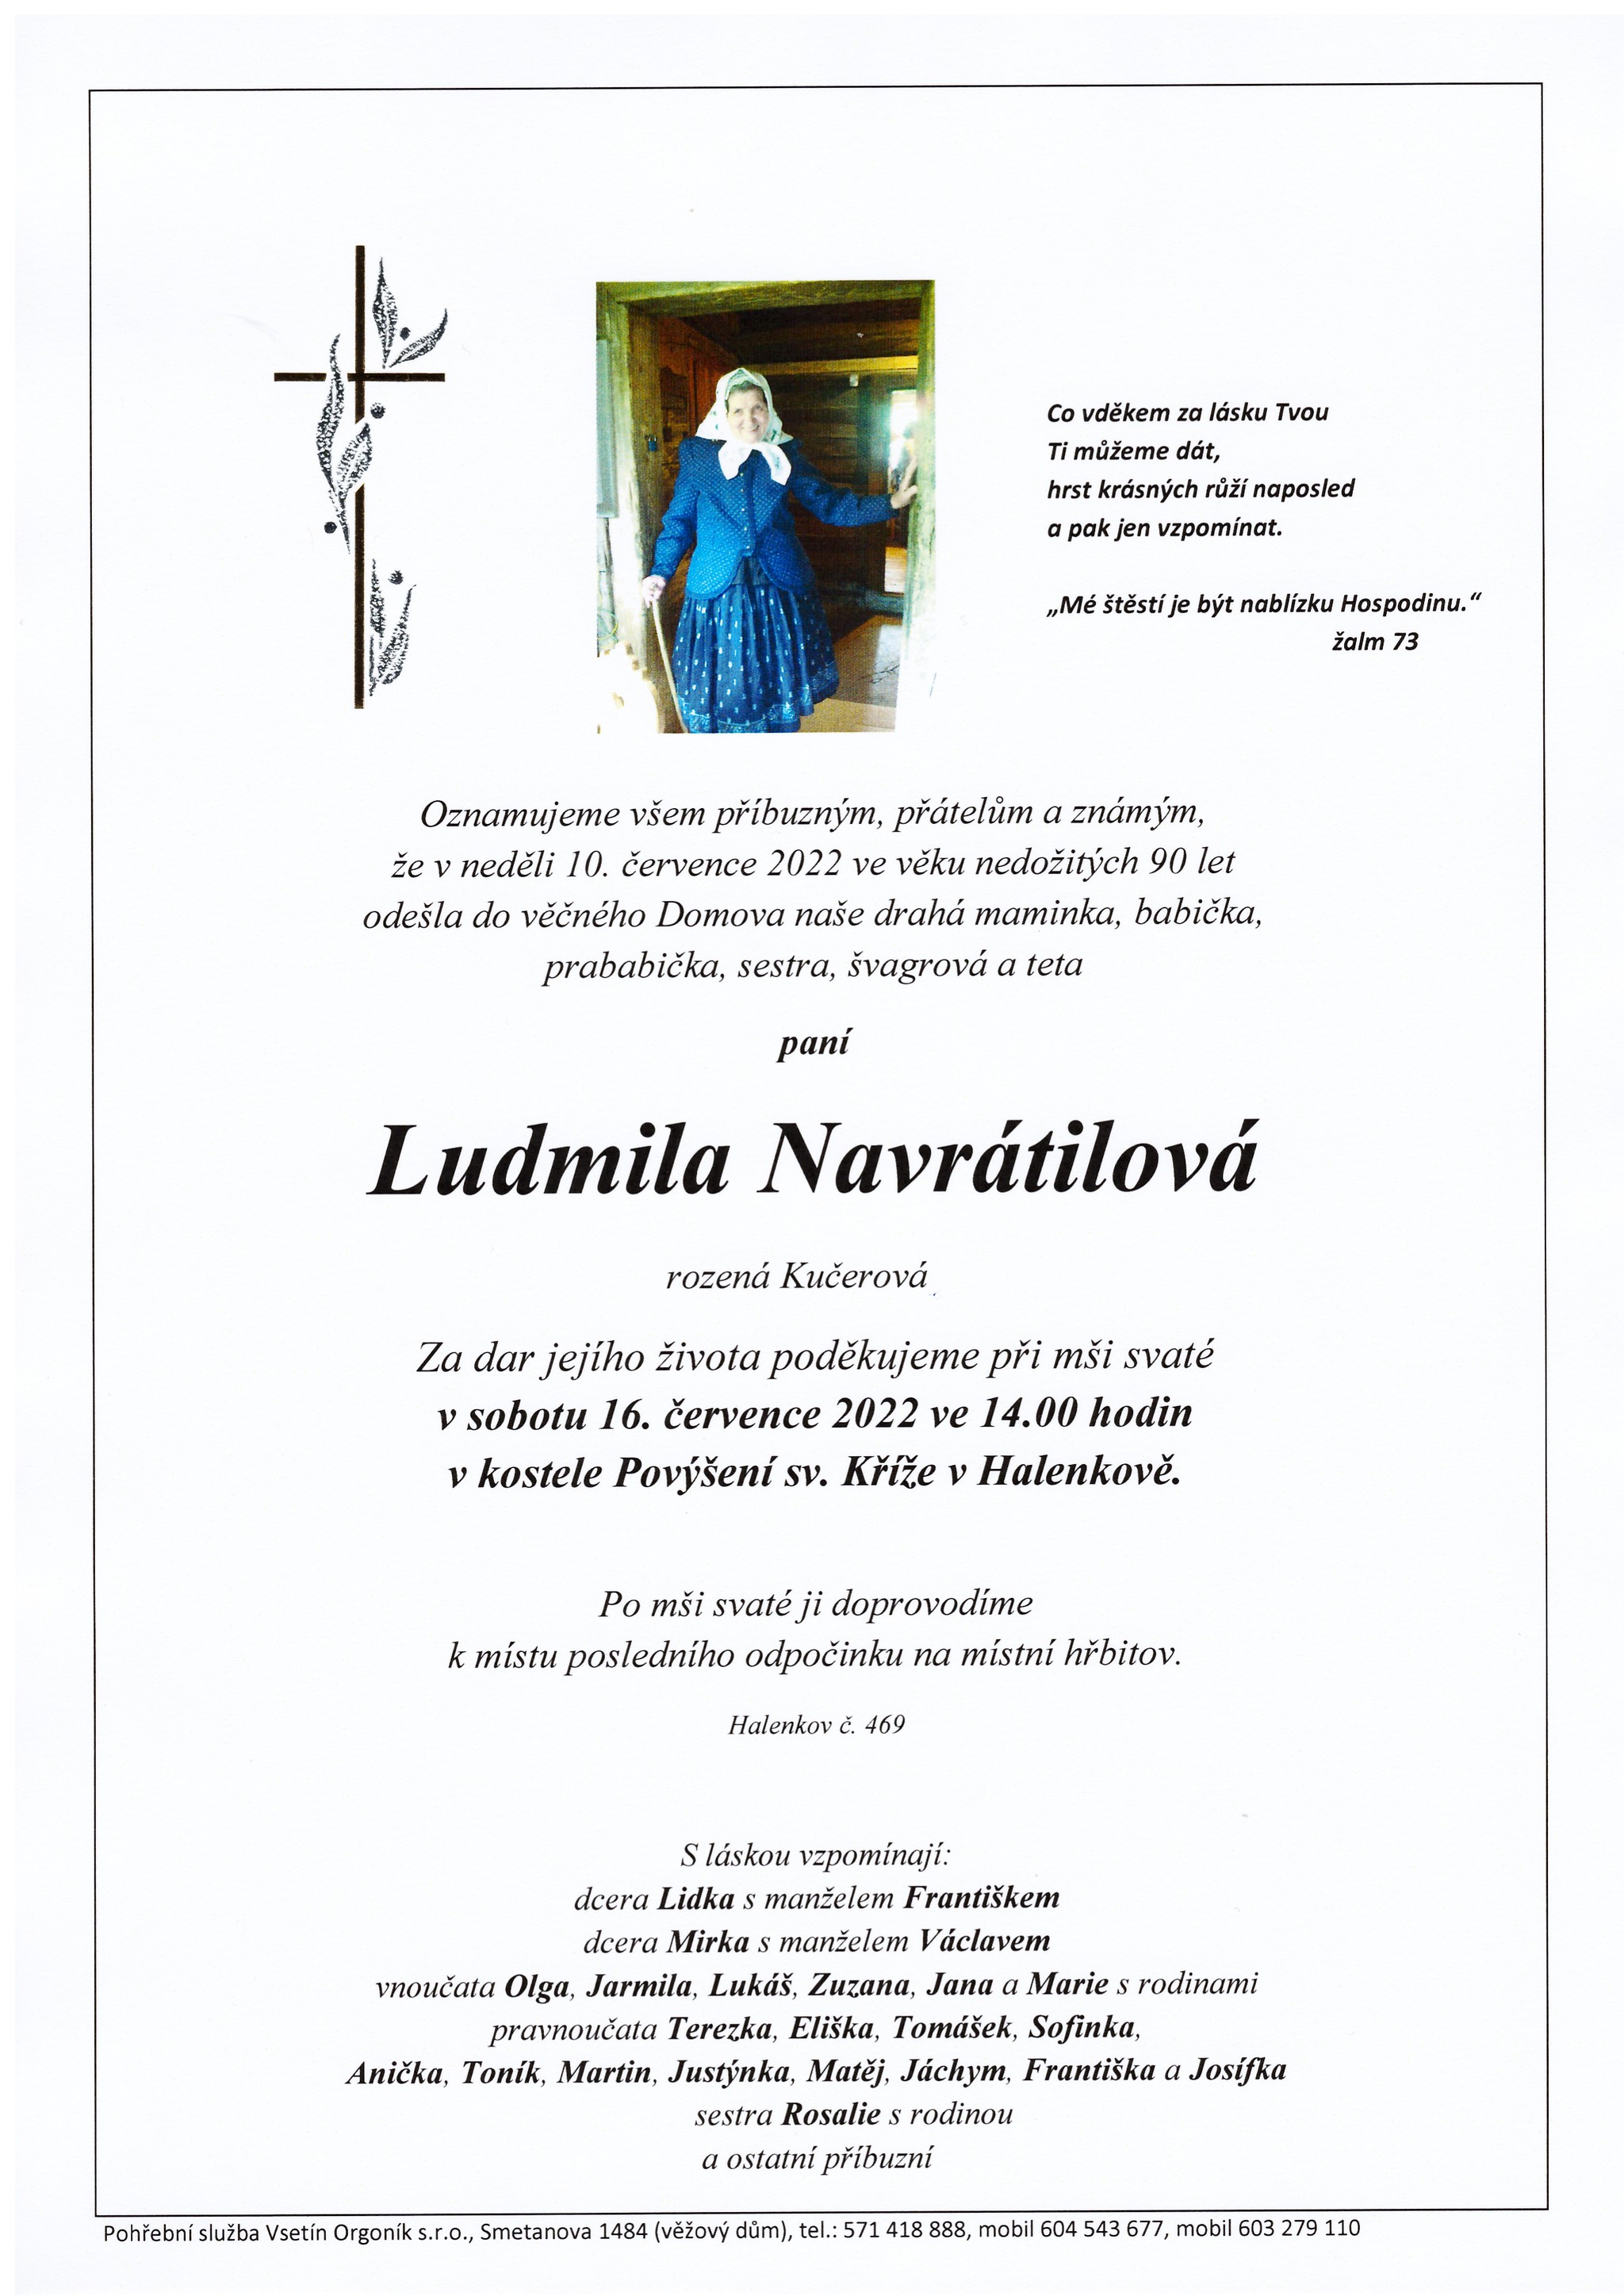 Ludmila Navrátilová